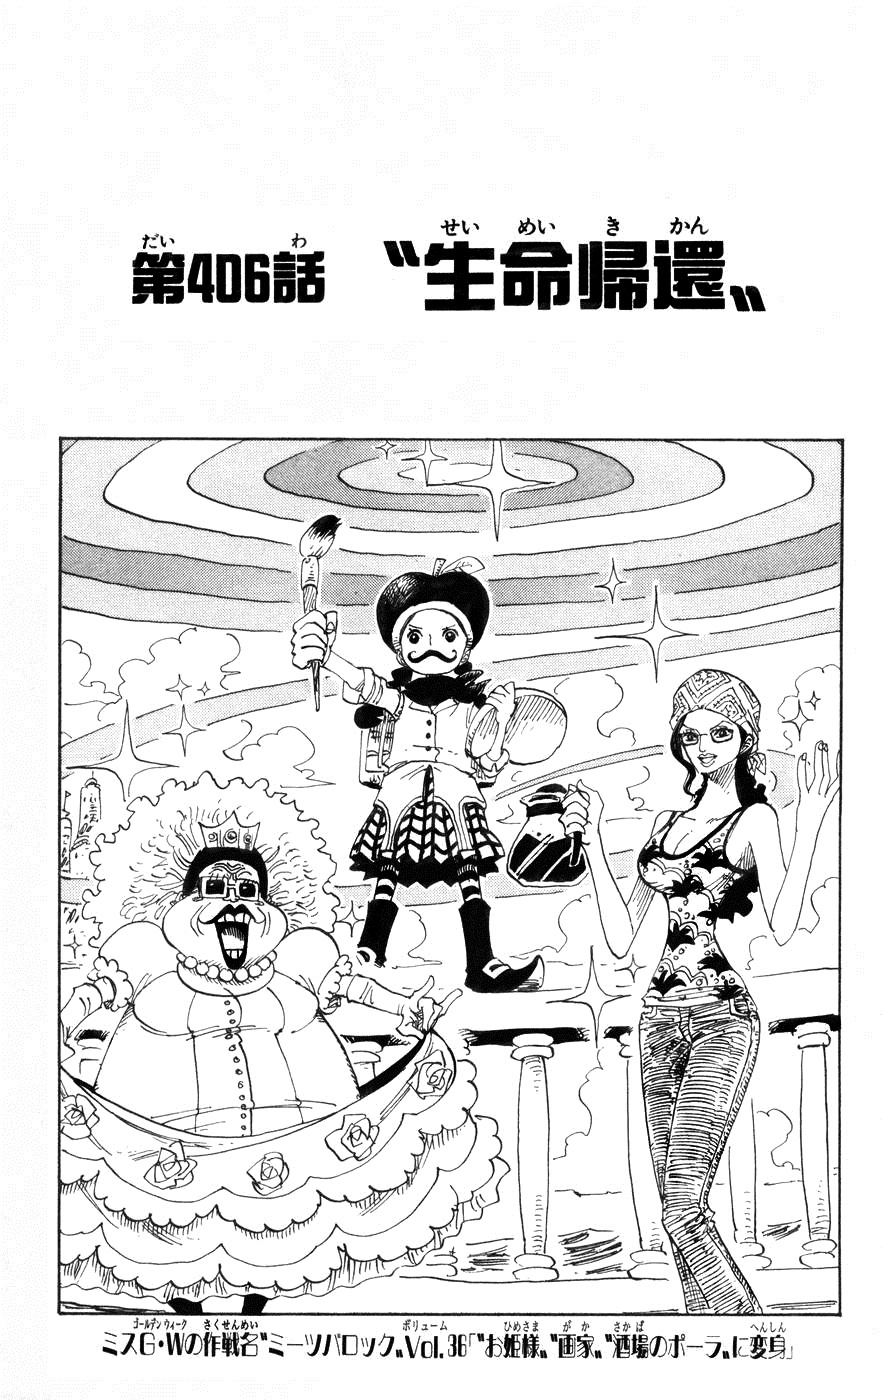 Seimei Kikan, One Piece Wiki